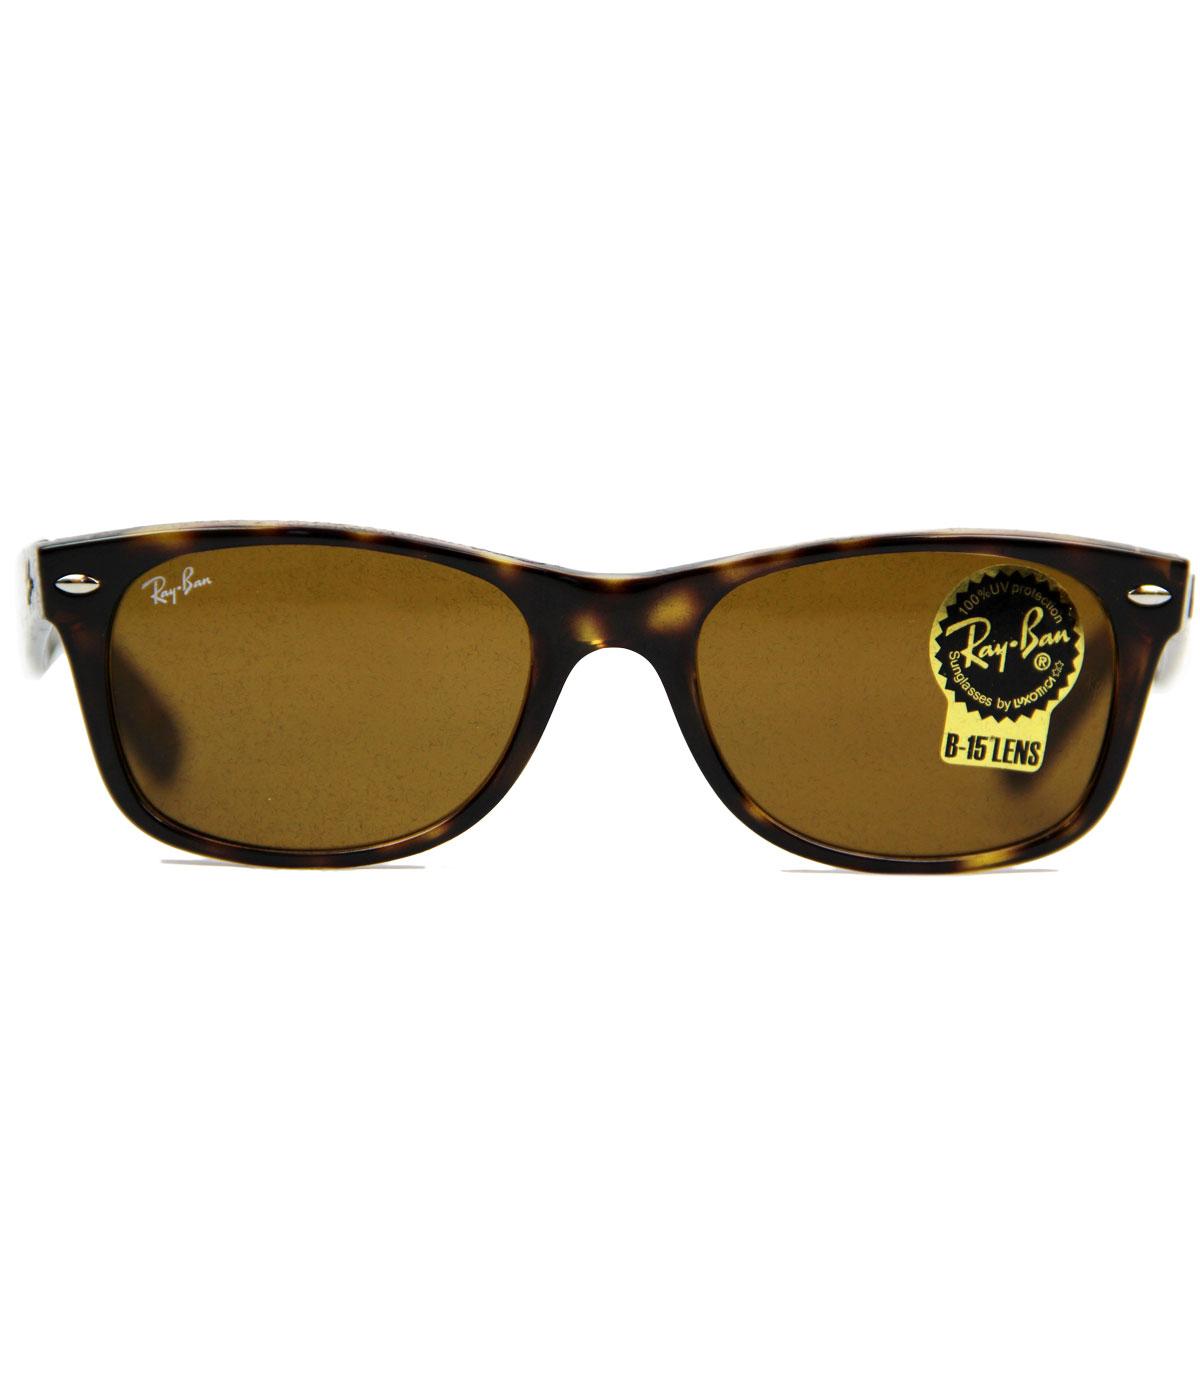 New Wayfarer Ray-Ban Retro 60s Mod Sunglasses (Br)